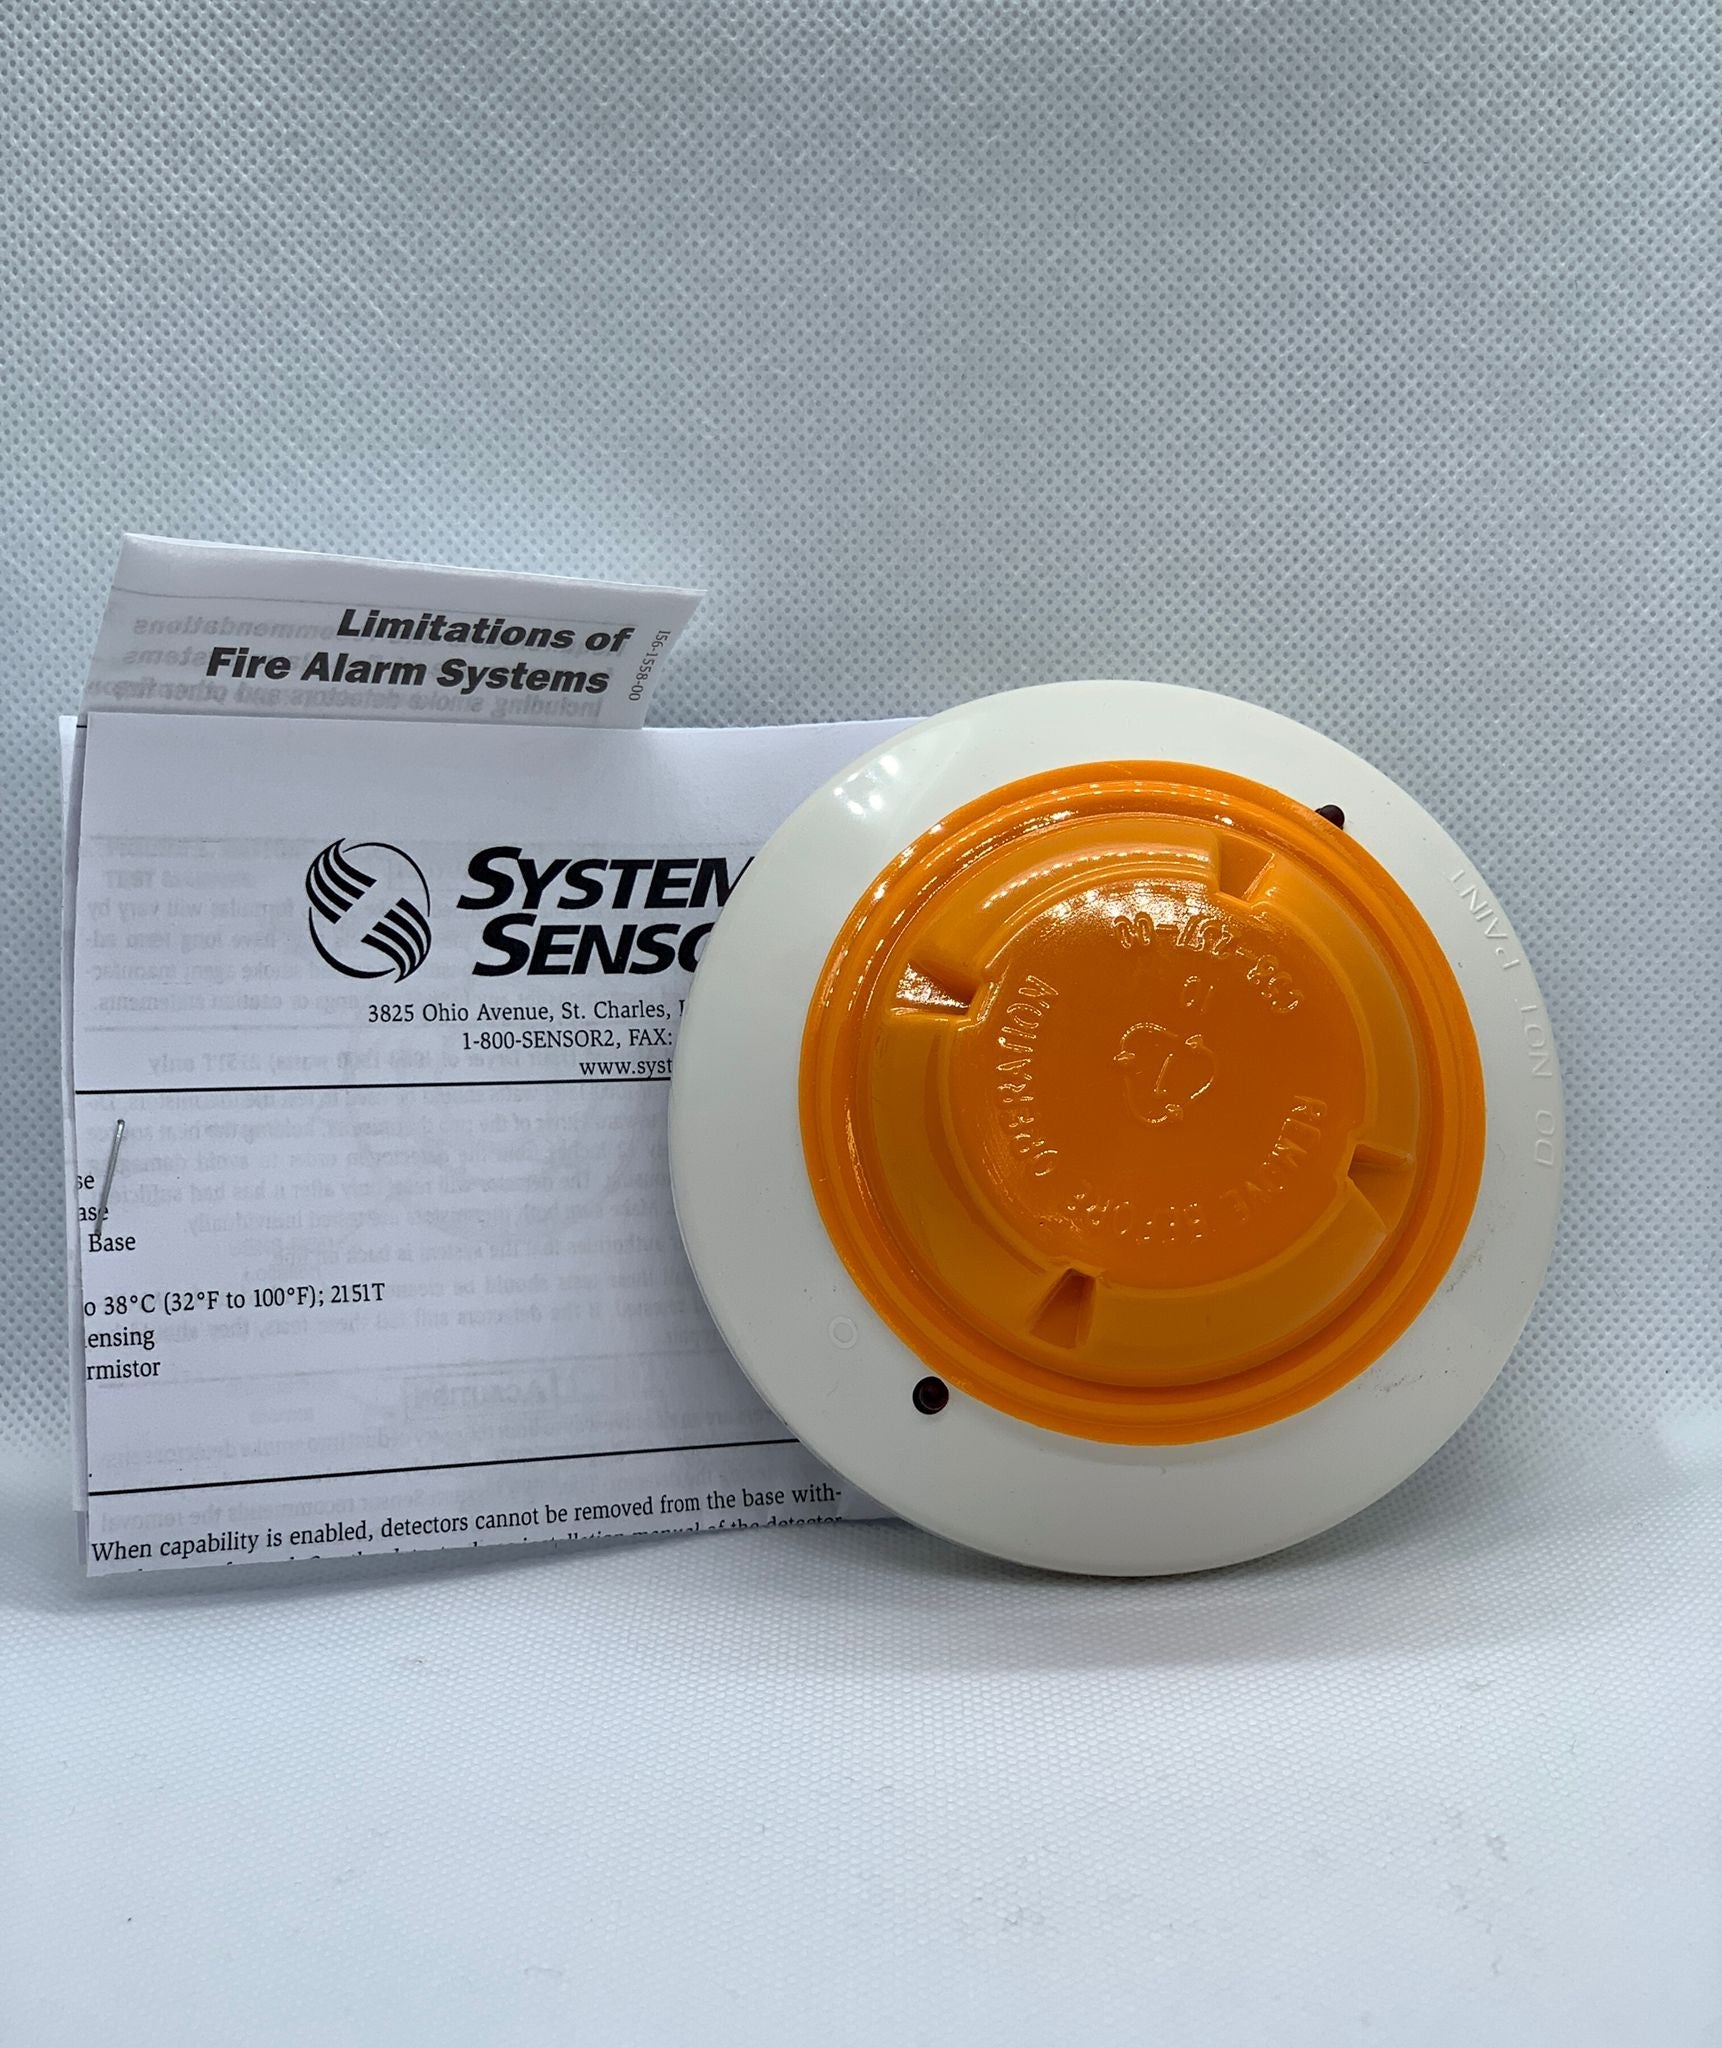 System Sensor 2151 - The Fire Alarm Supplier